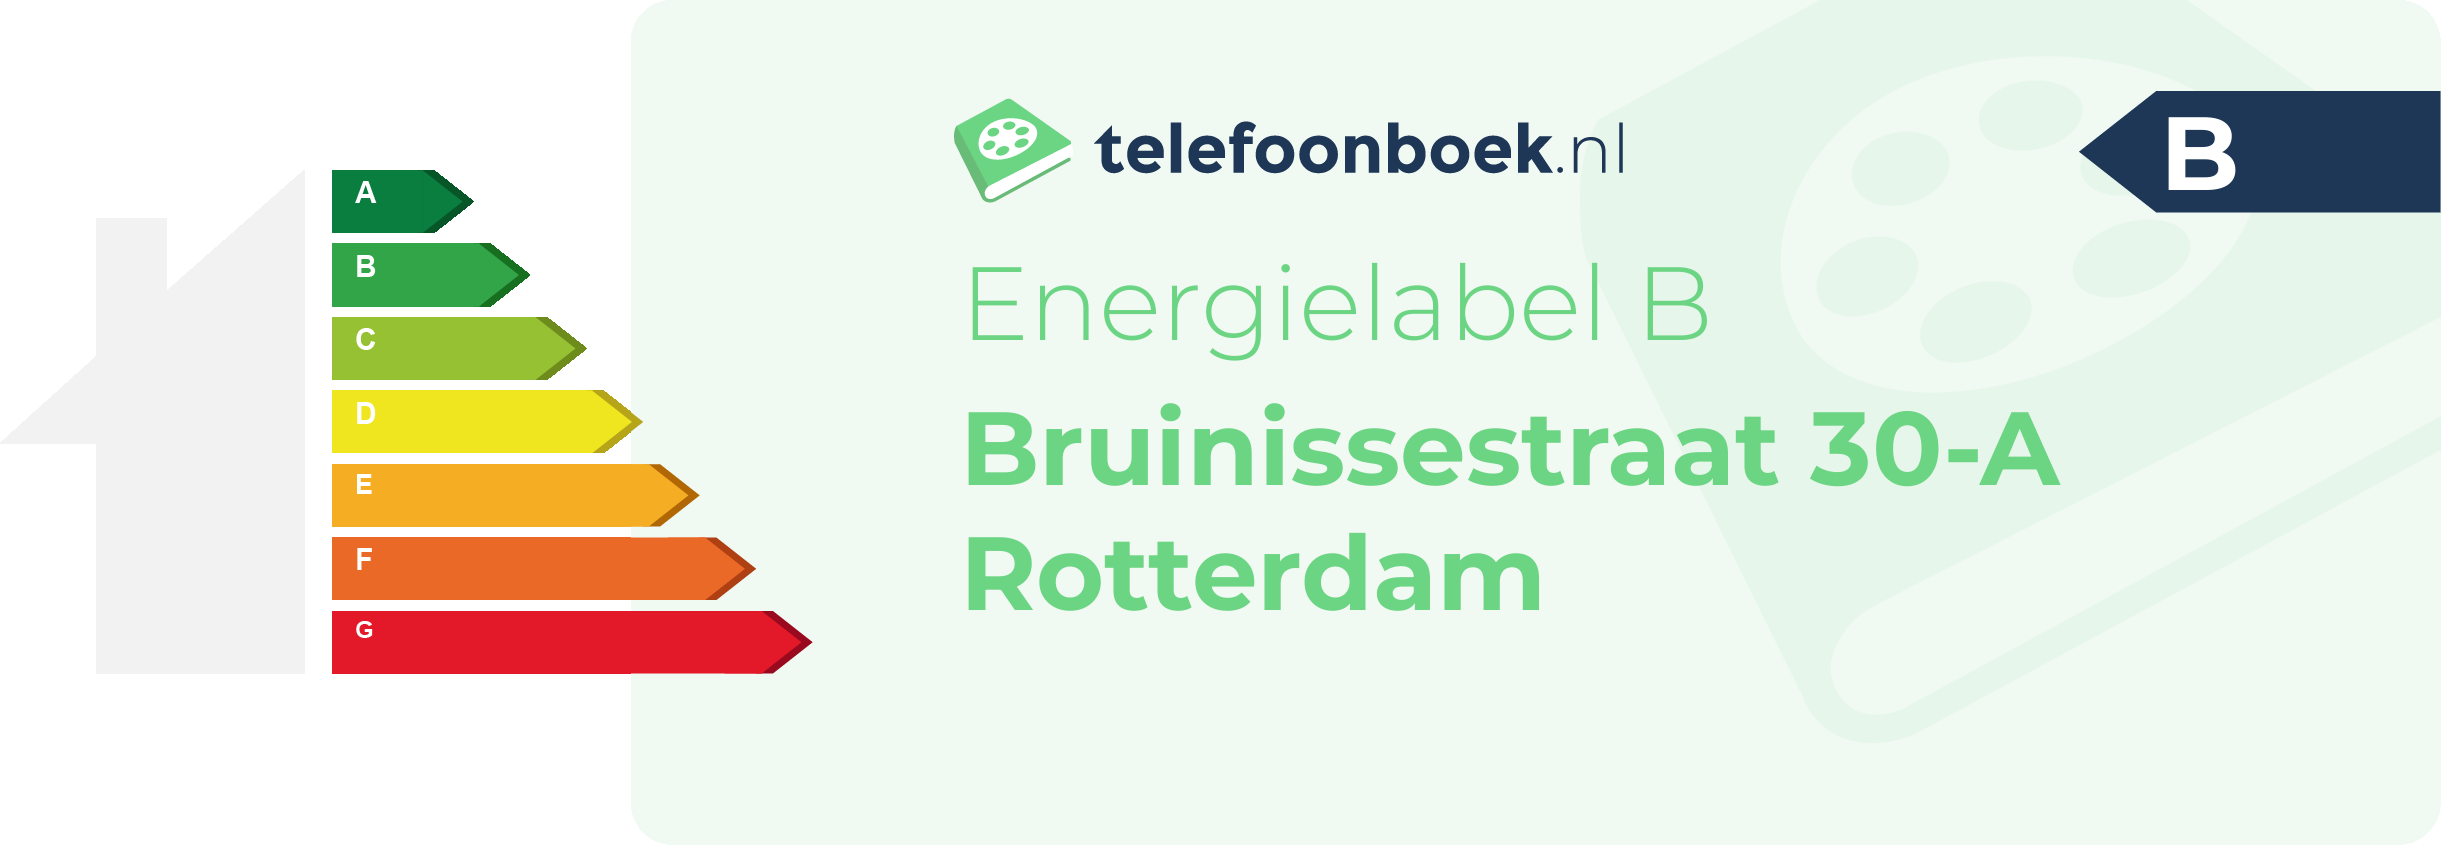 Energielabel Bruinissestraat 30-A Rotterdam